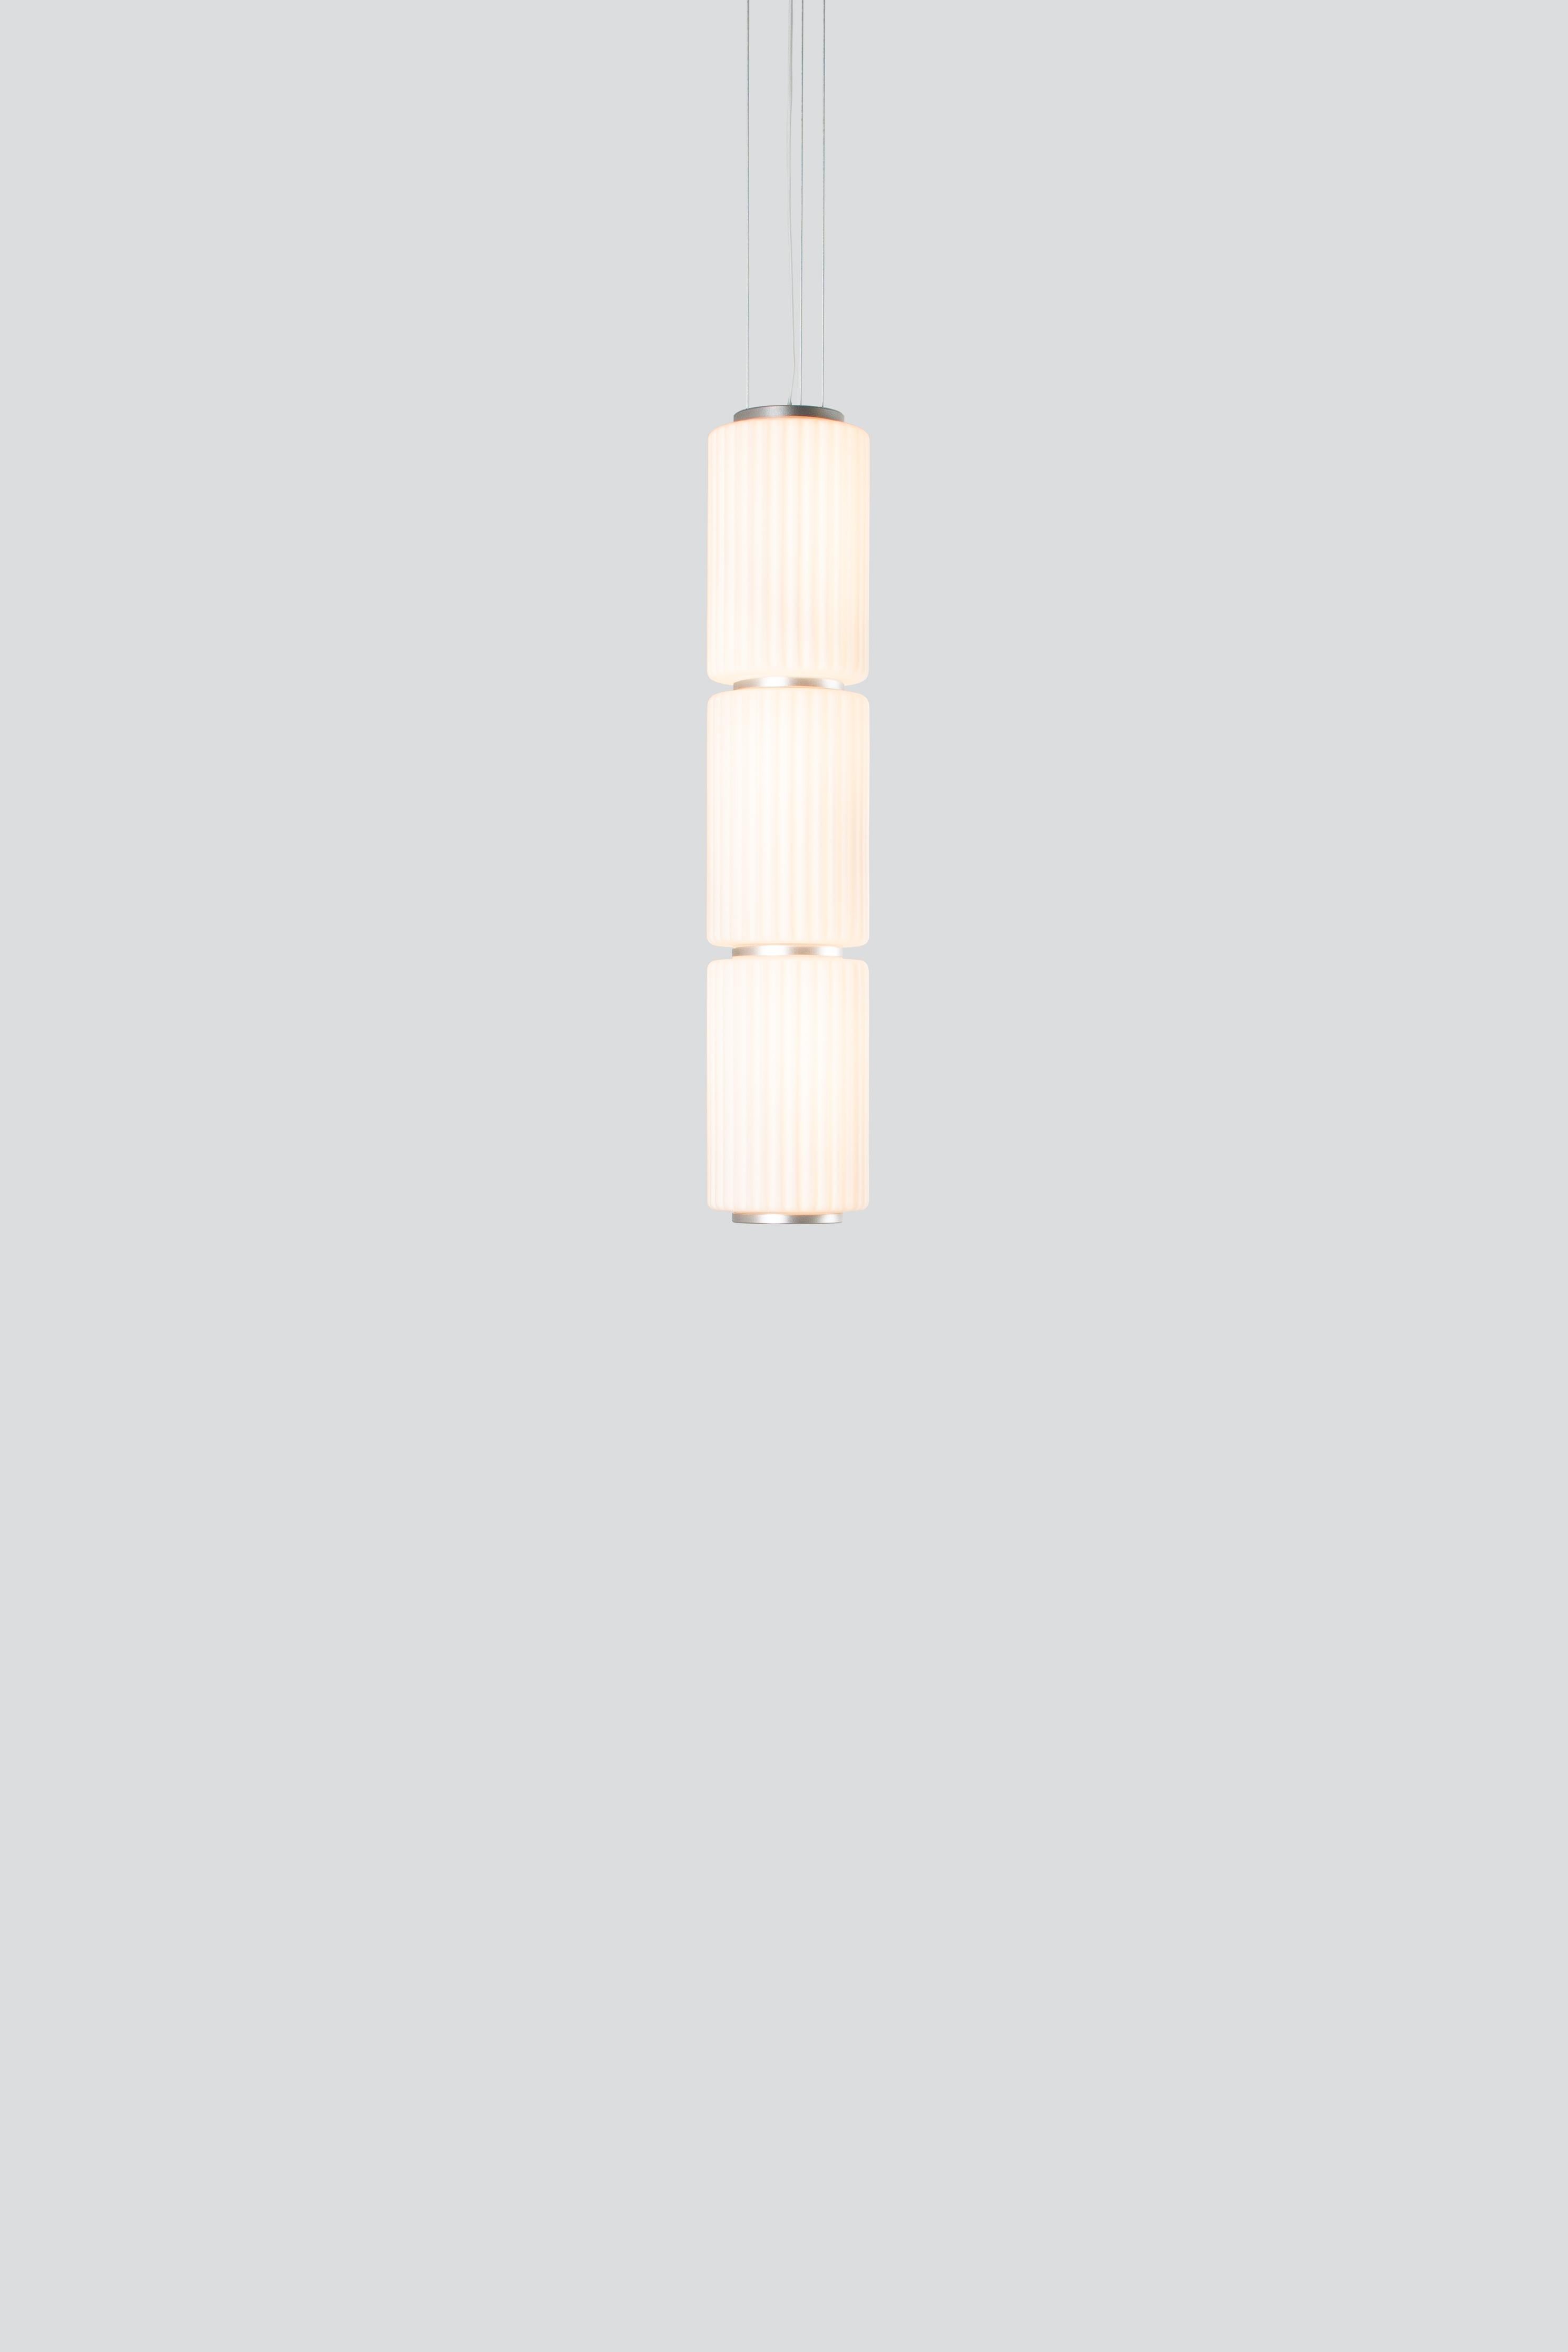 Organic Modern Contemporary Pendant Lamp 'Column' 175-3, Vertical, Ivory For Sale